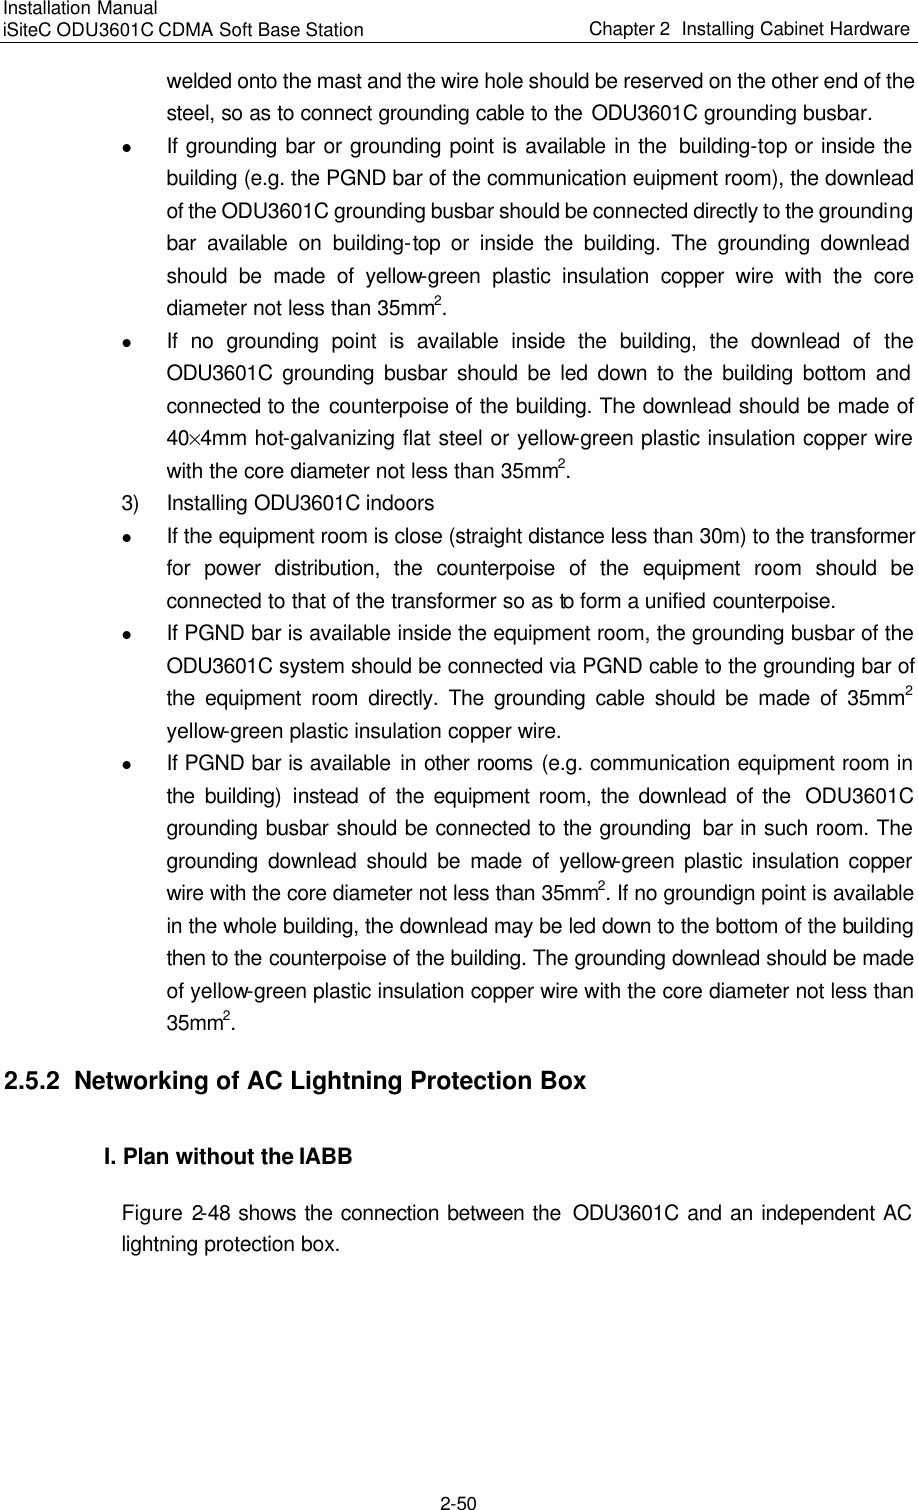 Page 92 of Huawei Technologies ODU3601C-800 CDMA Base Station User Manual 1